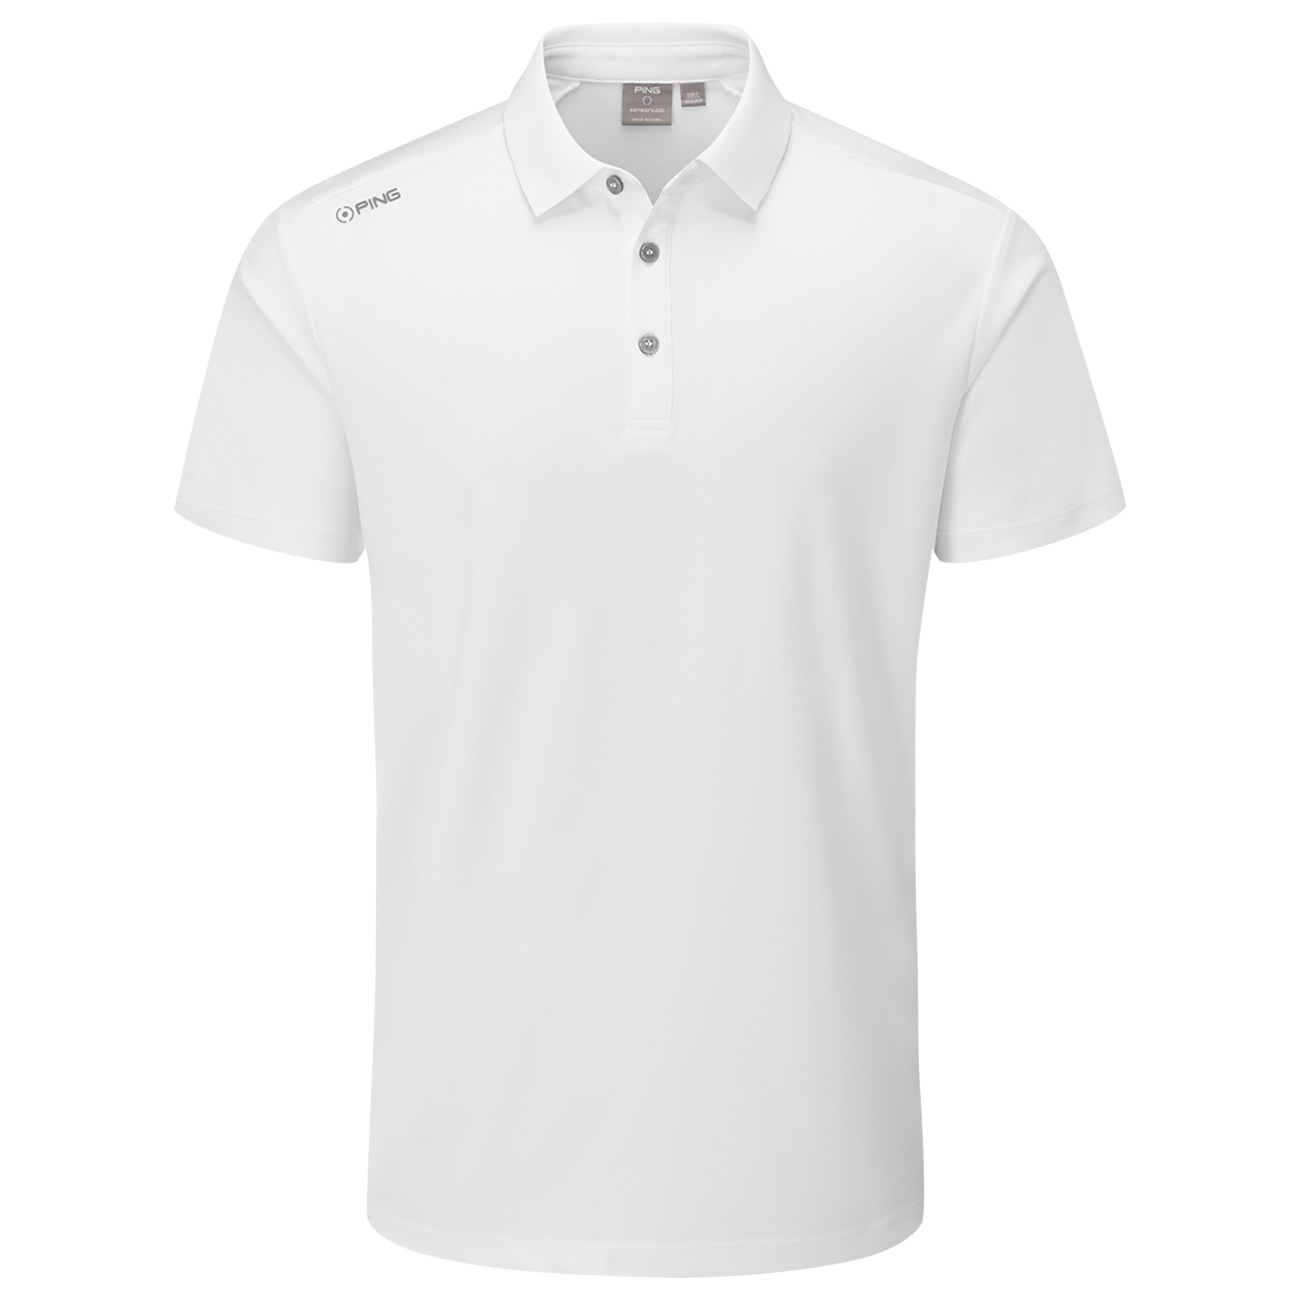 PING Lindum Golf Polo Shirt